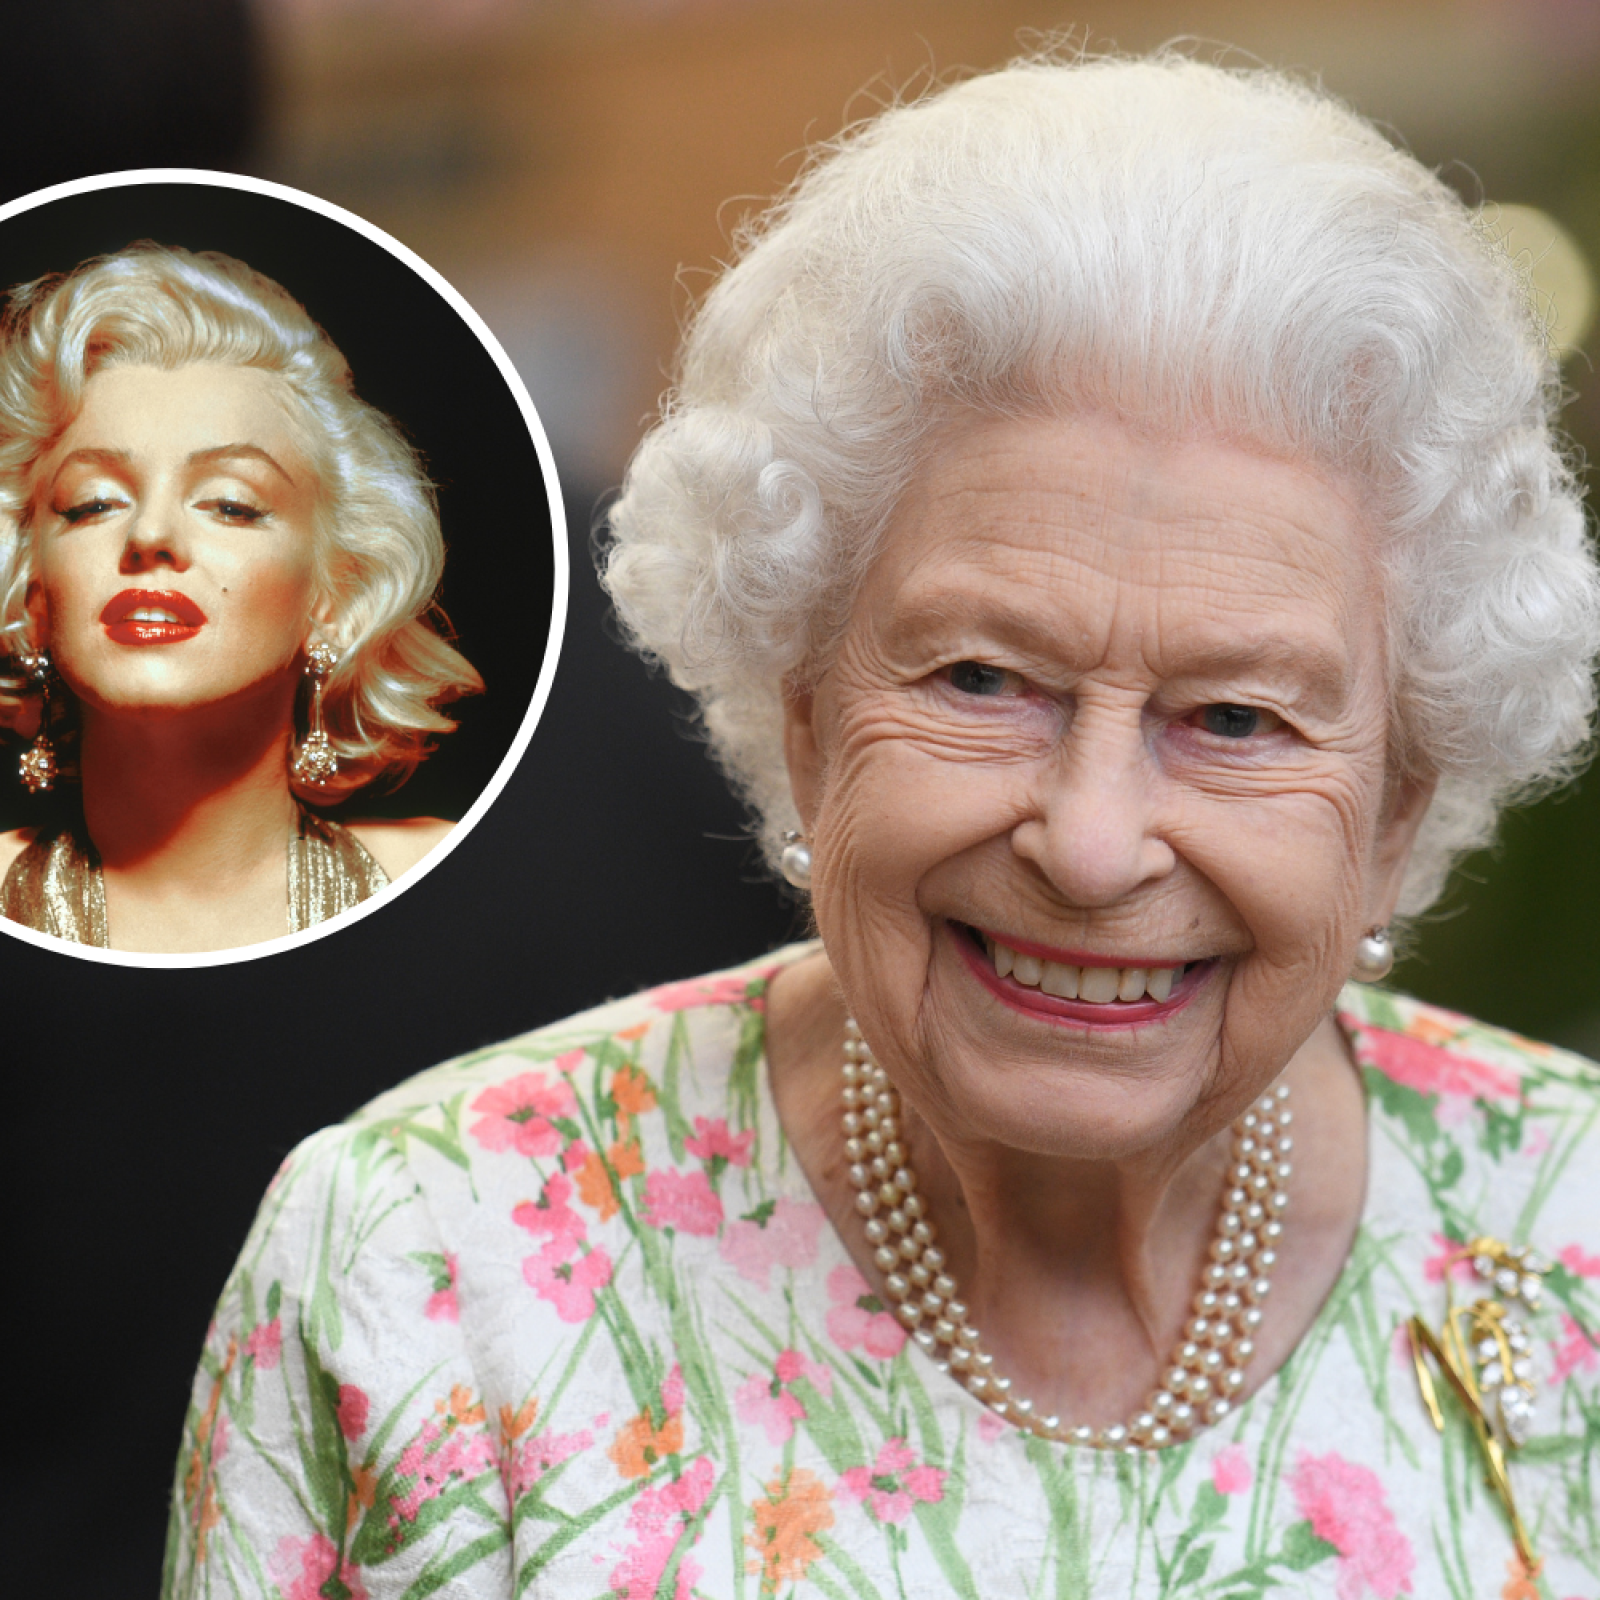 What Queen Elizabeth II and Marilyn Monroe Had in Common